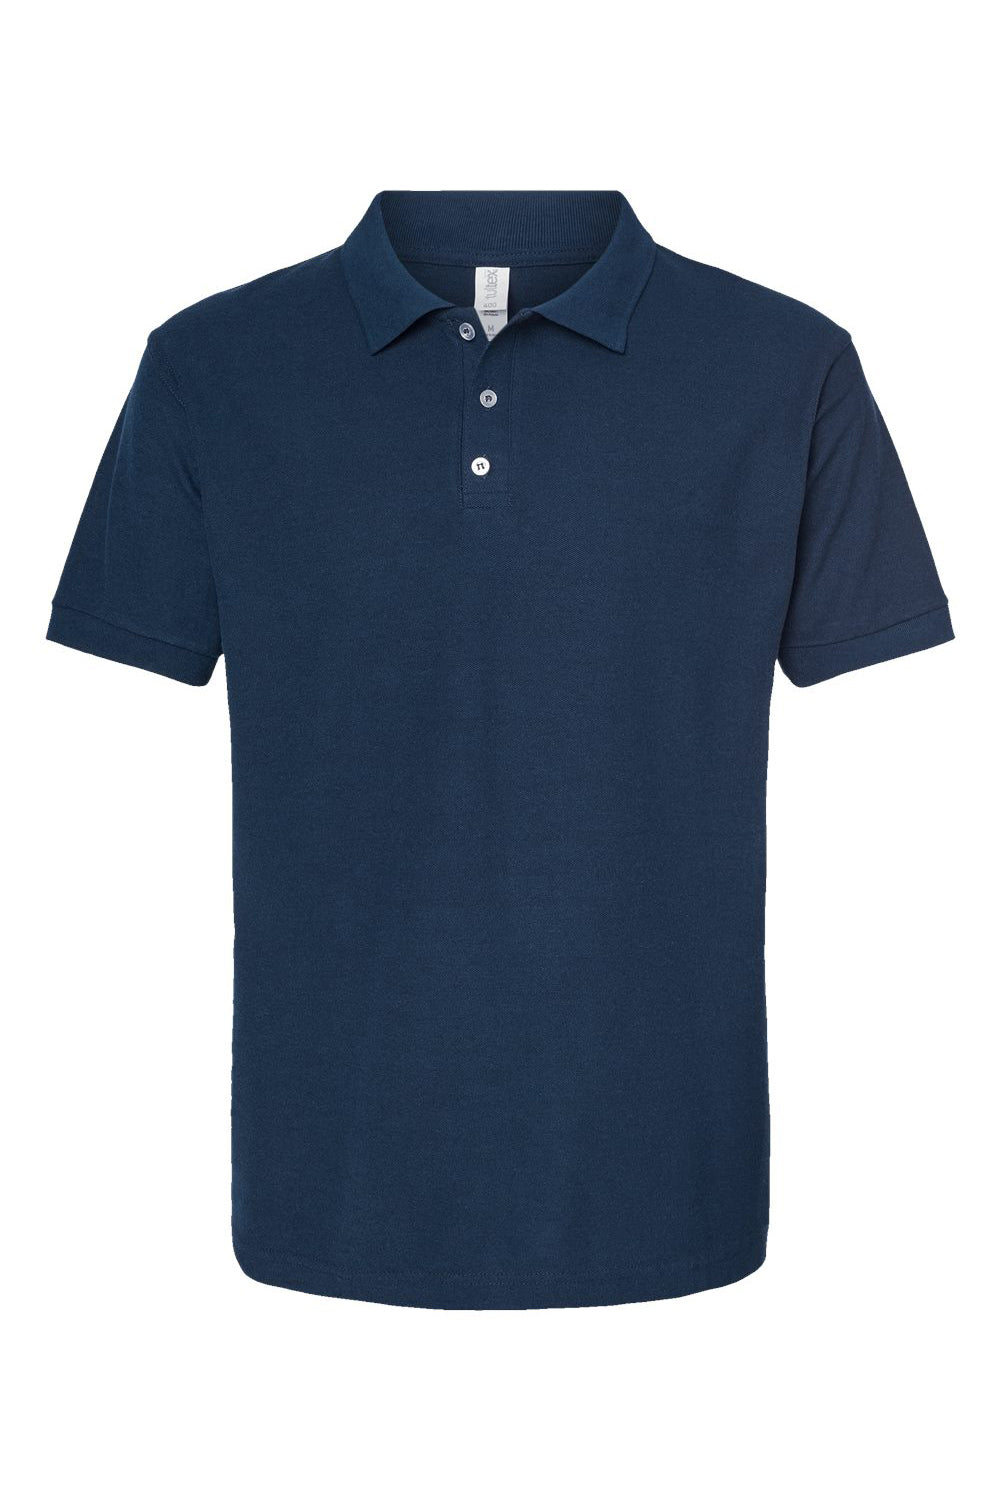 Tultex 400 Mens Sport Shirt Sleeve Polo Shirt Navy Blue Flat Front